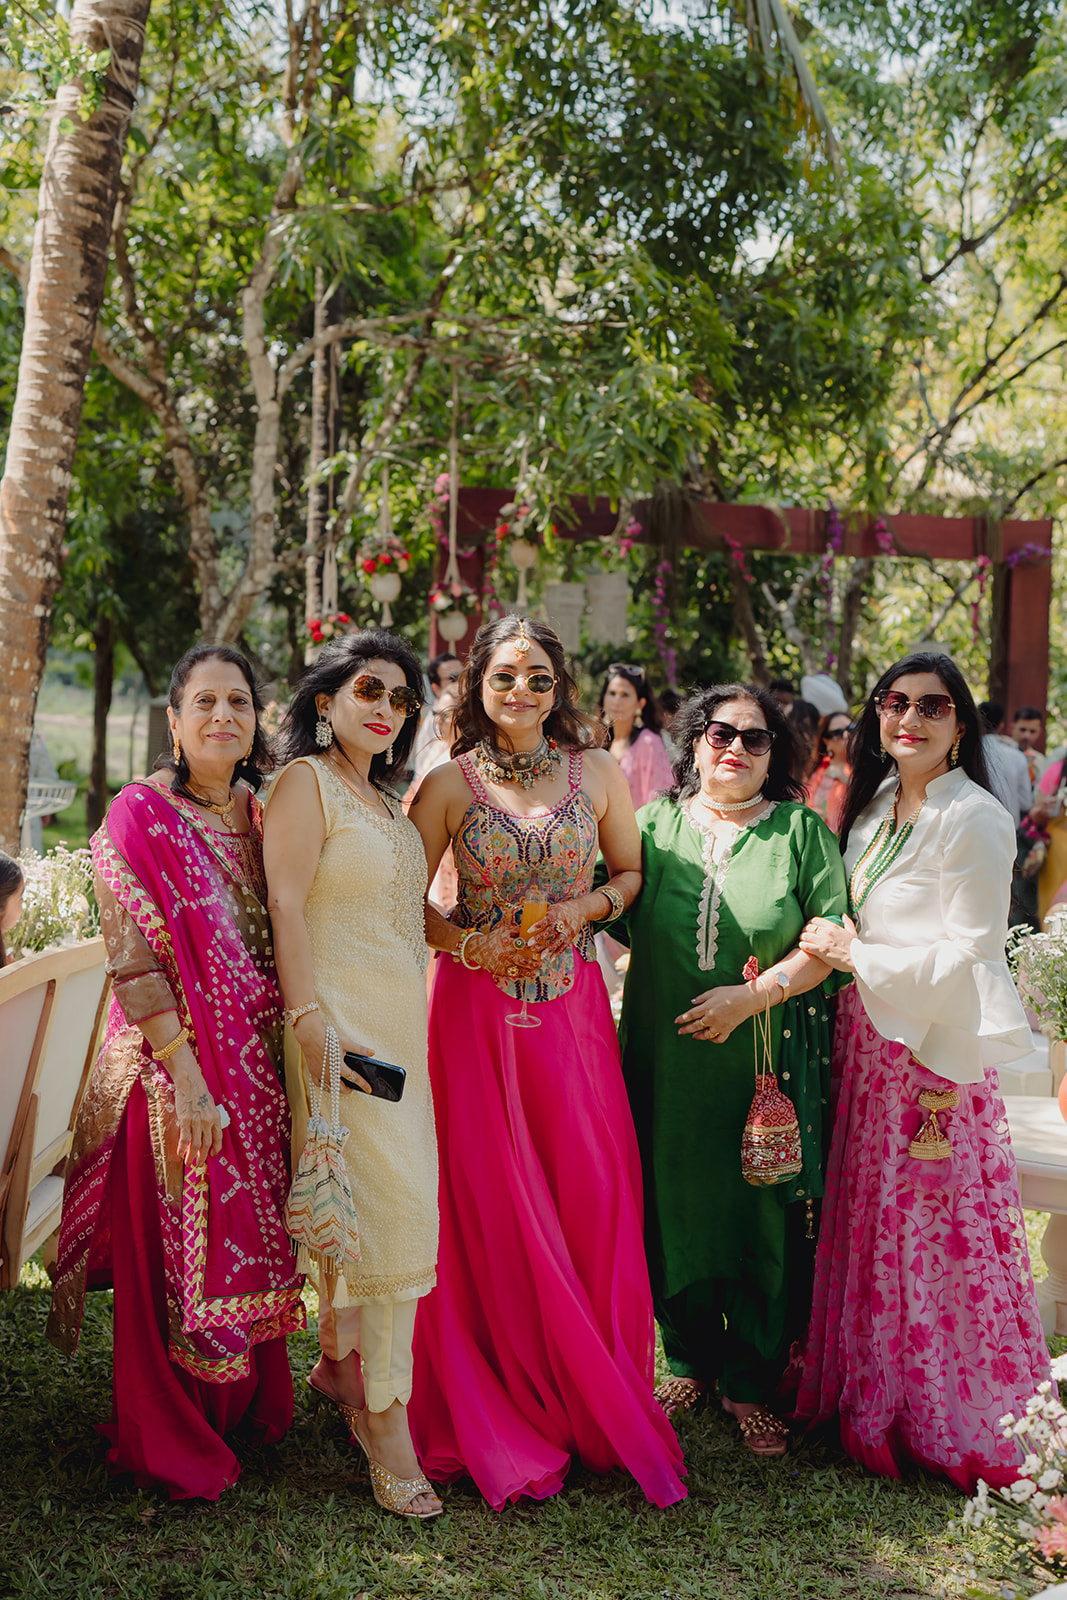 Family celebration: Capturing the bride's happiness alongside her loving family members